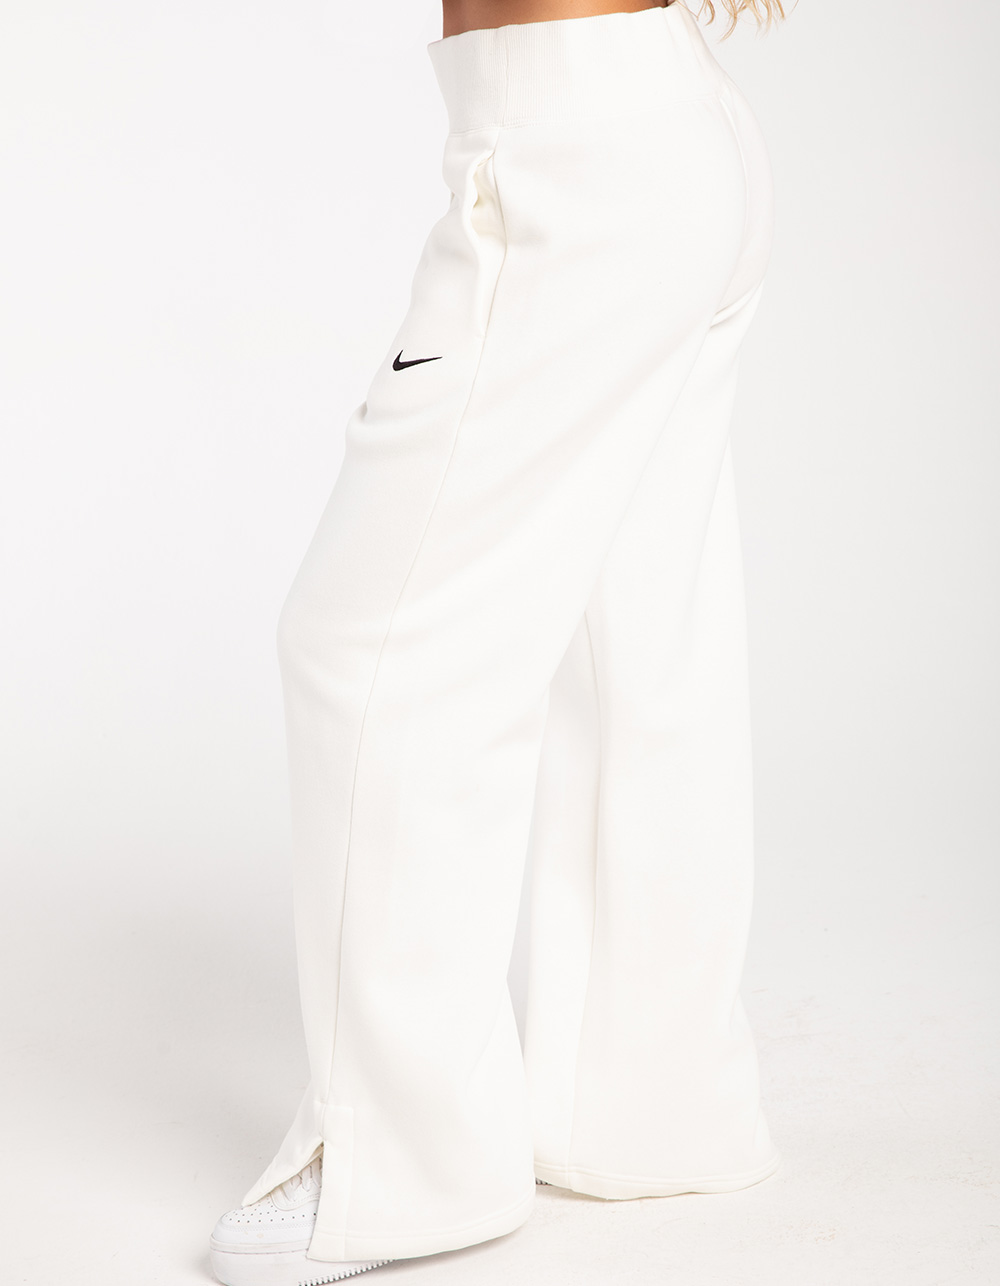 Nike WMNS Fleece Pants White